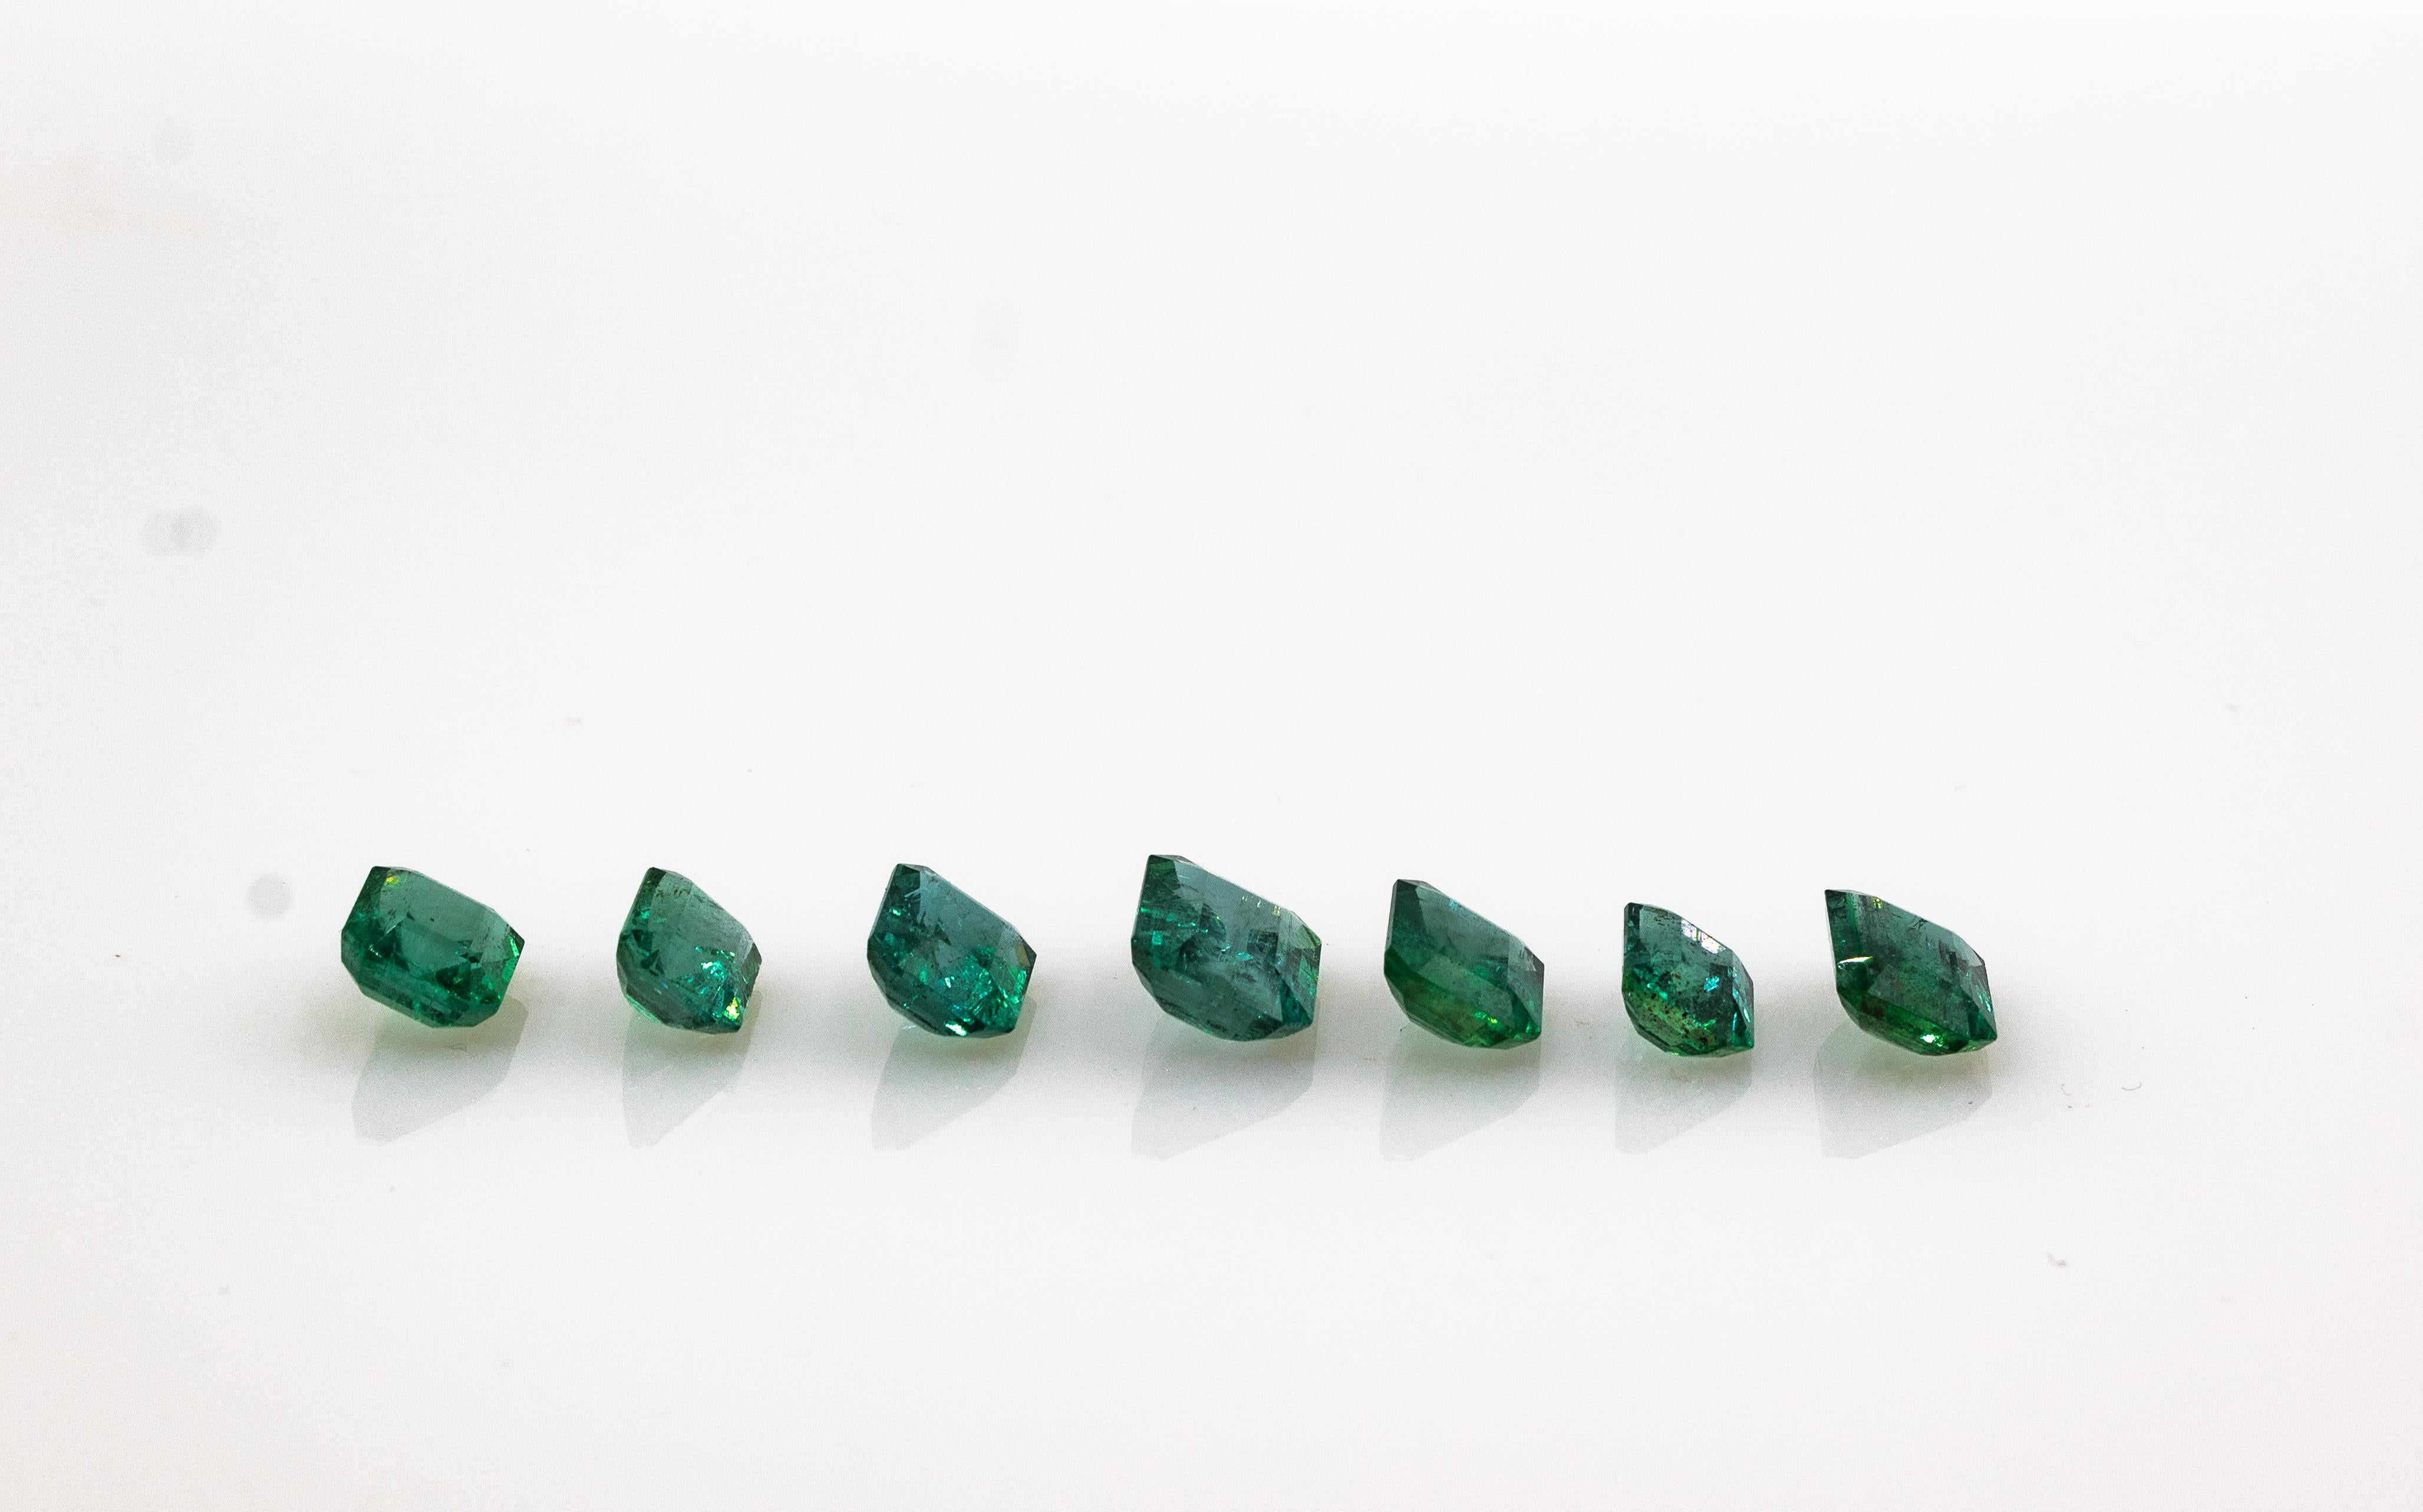 Certifiable Zambia Octagon Cut 2.98 Carat Emerald Loose Gemstone 7